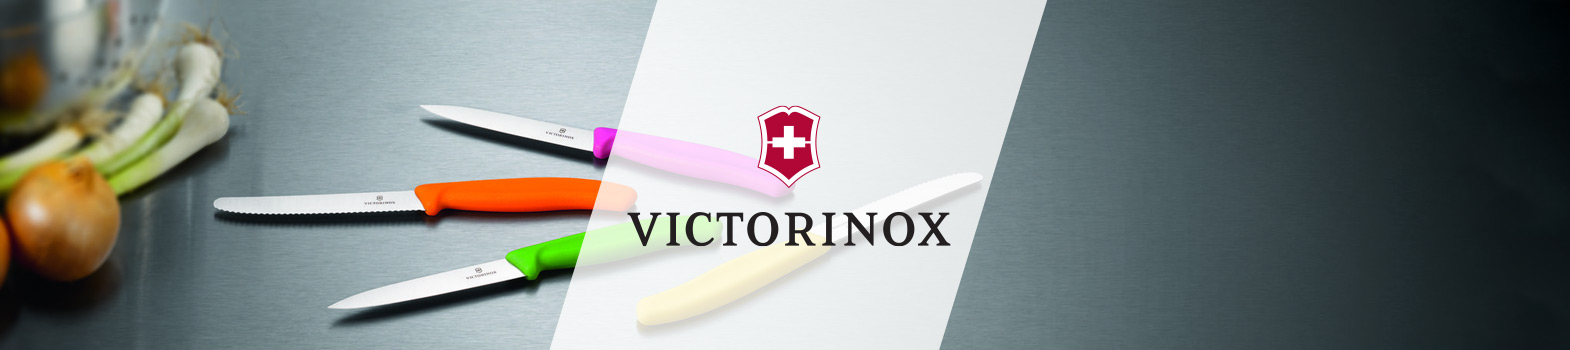 Victorinox Luggage, Cutlery & More